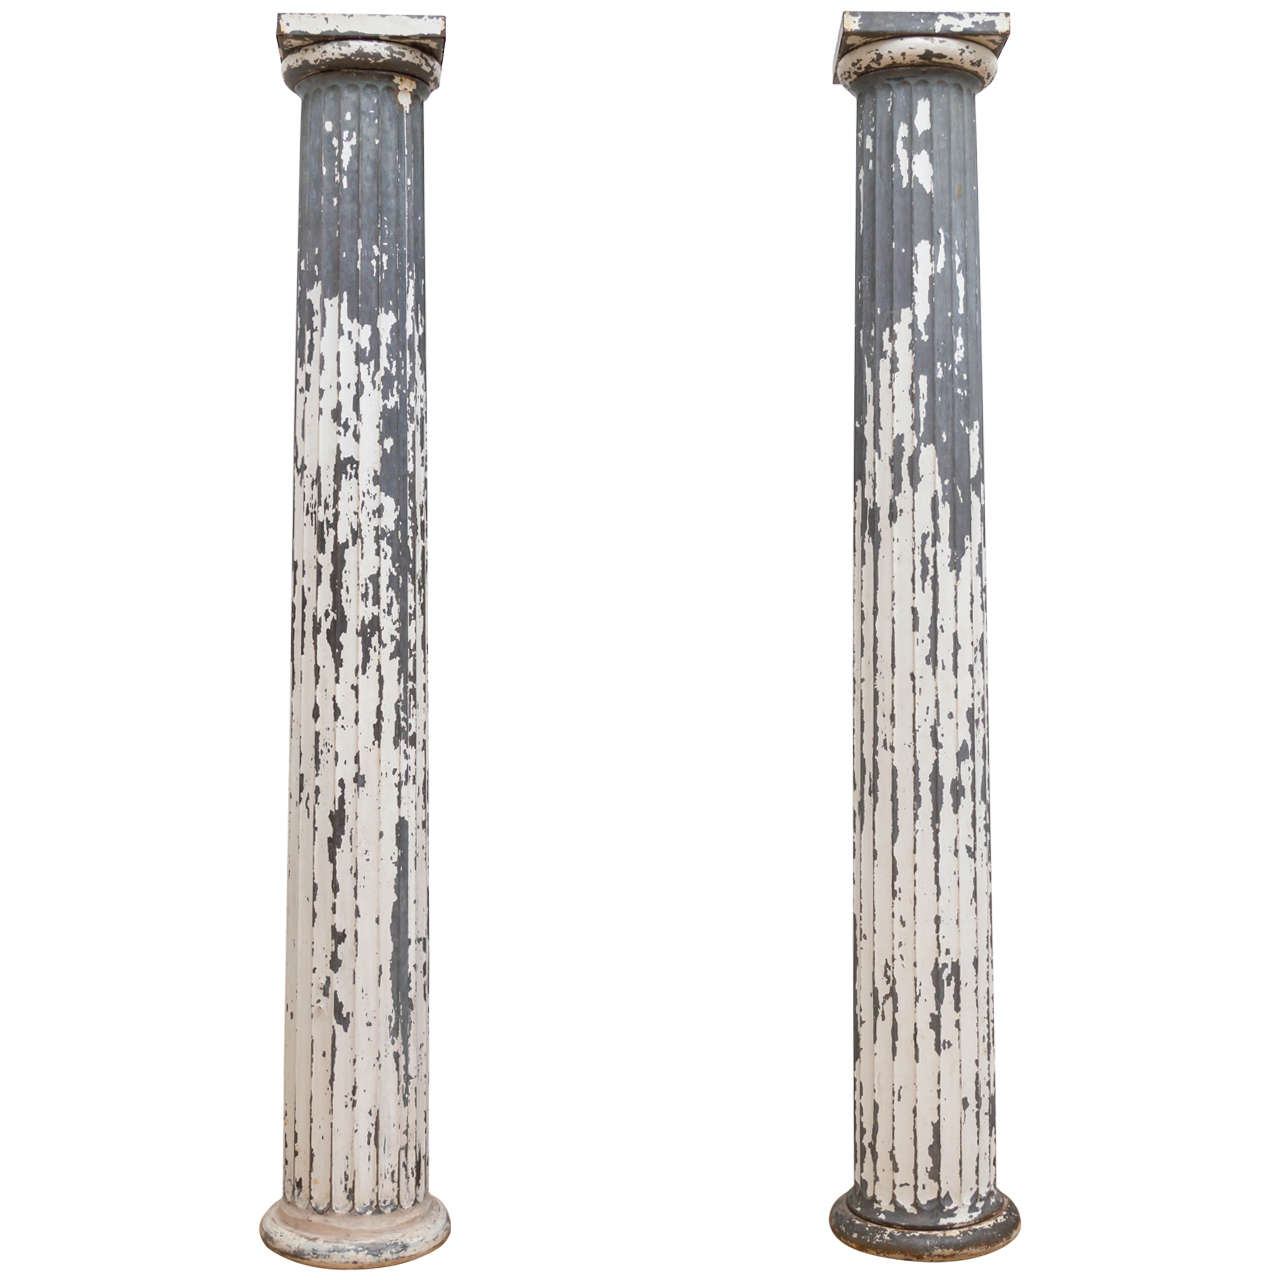 Pair of Beautifully Distressed Metal Doric Columns